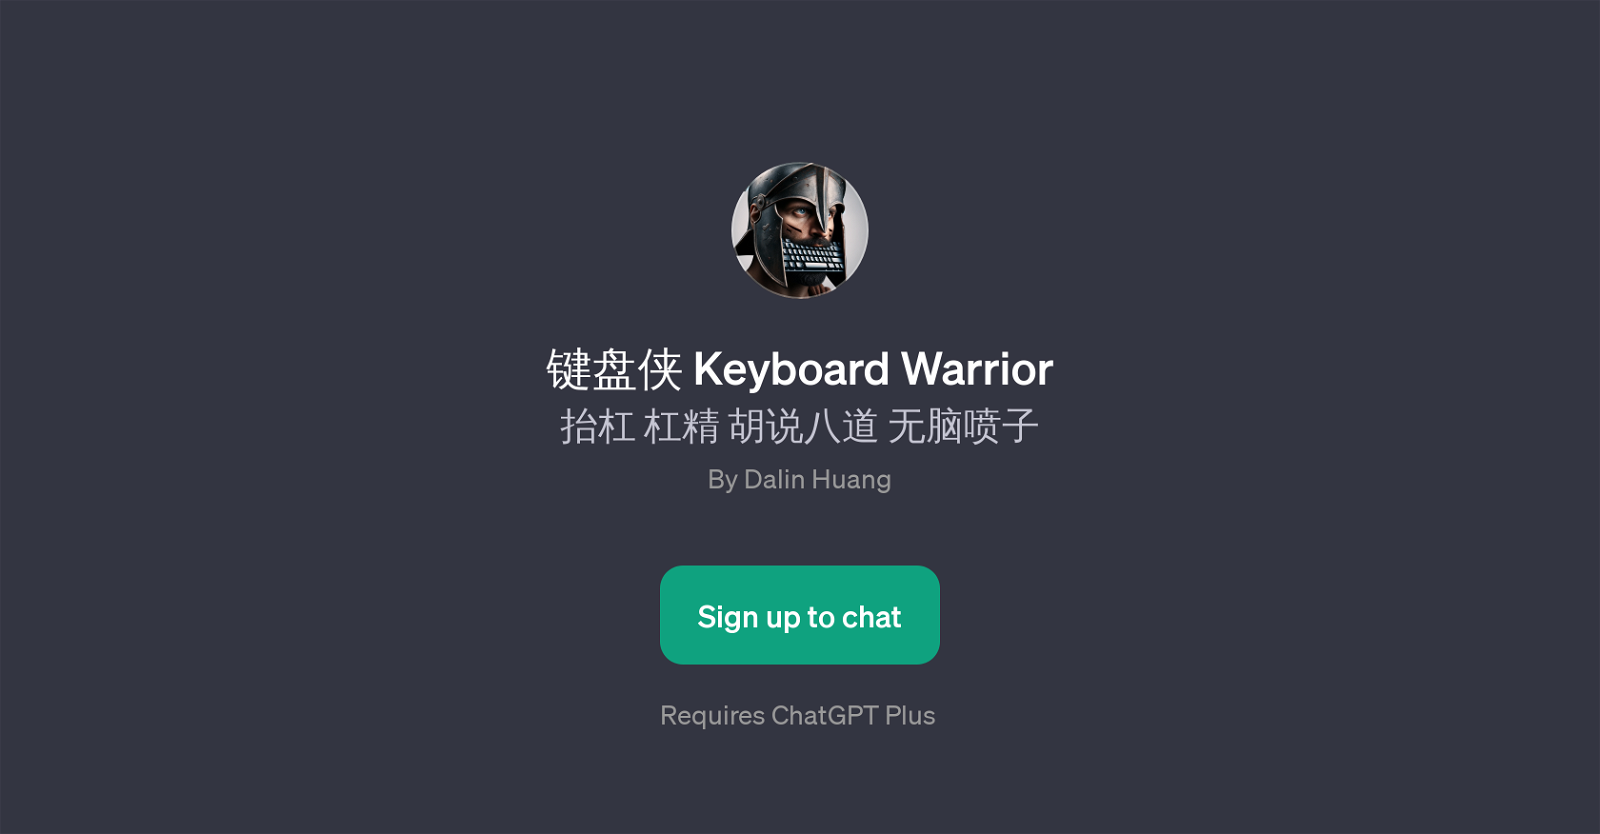 Keyboard Warrior website